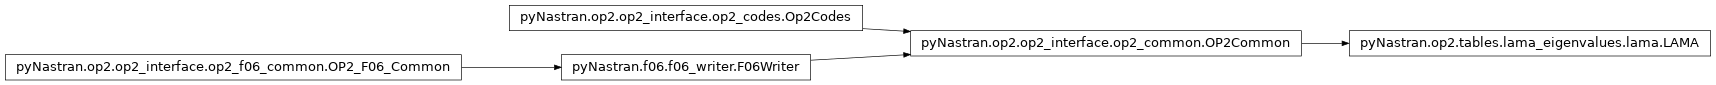 Inheritance diagram of pyNastran.op2.tables.lama_eigenvalues.lama